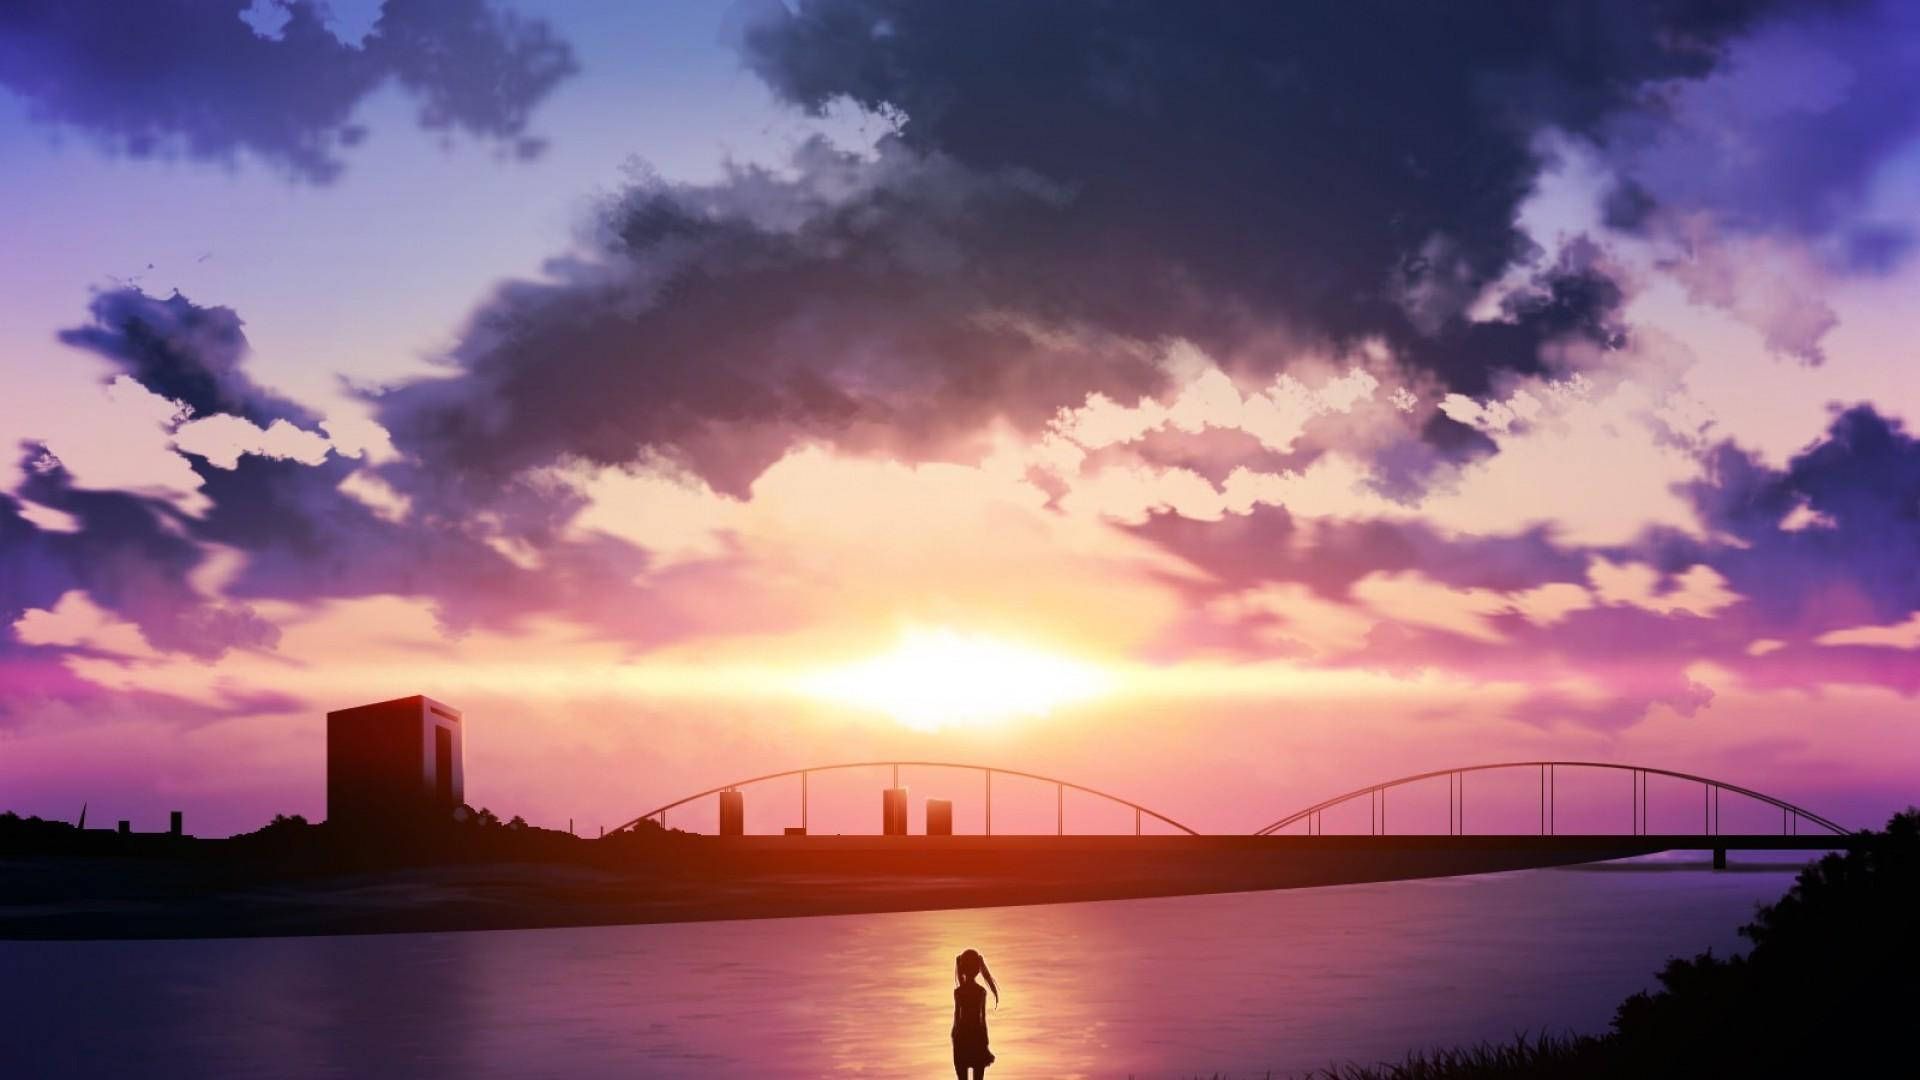 Download Girl And Bridge Anime Aesthetic Sunset Wallpaper